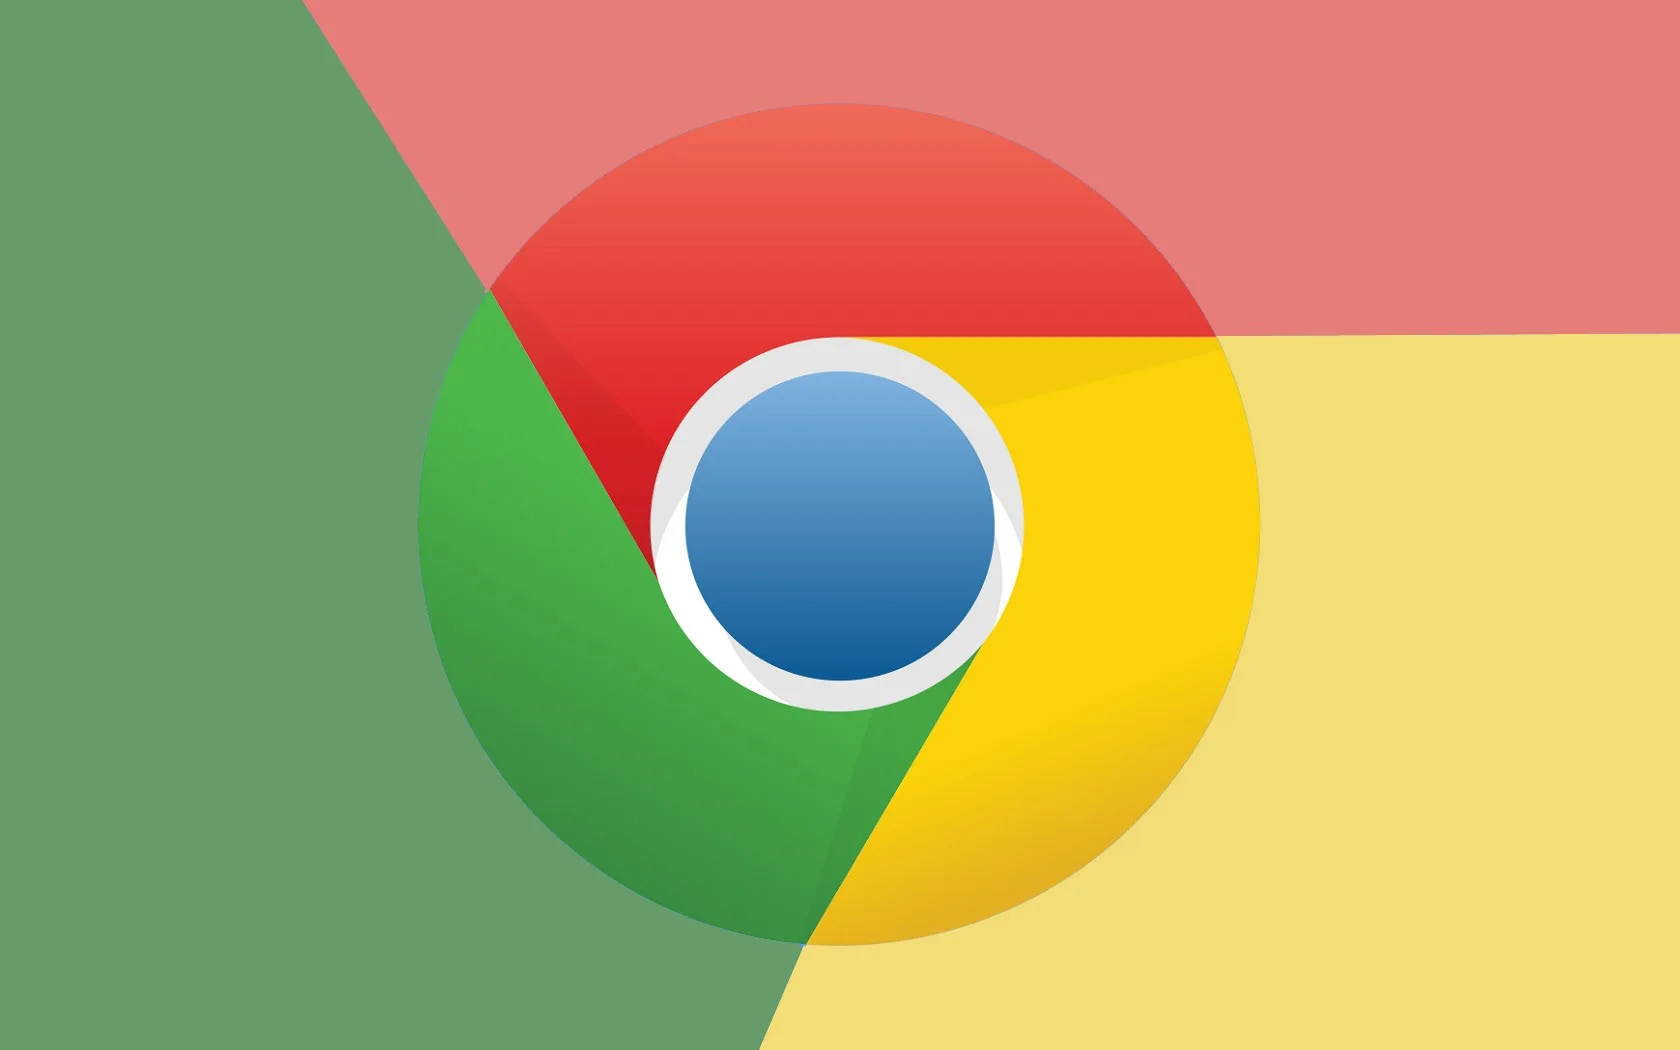 Google Chrome interface made more convenient